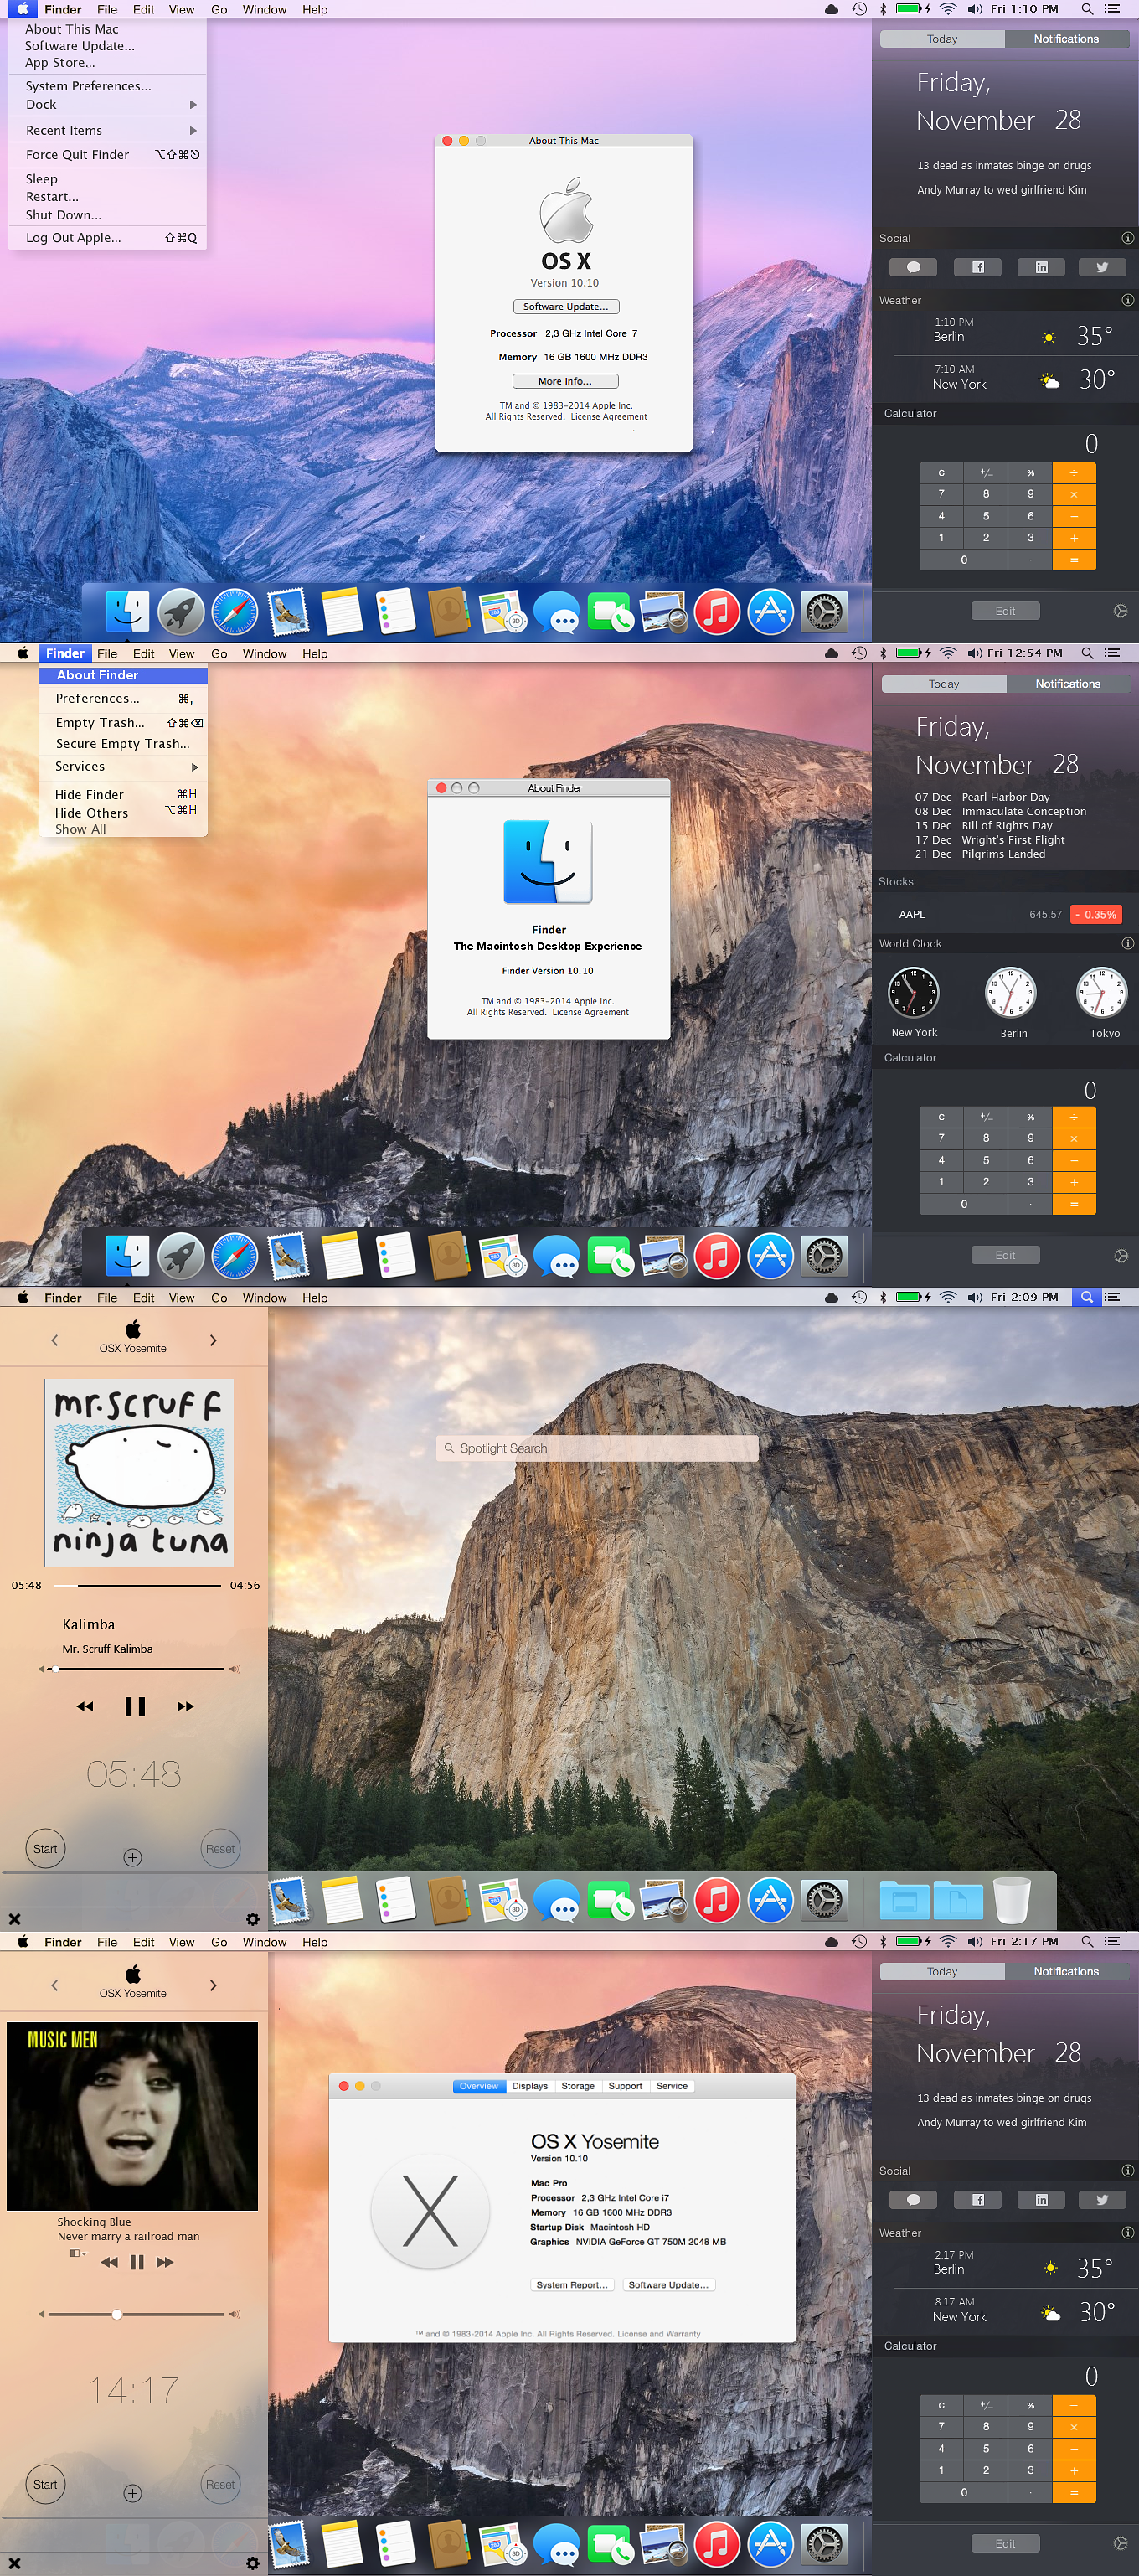 Mac Os Yosemite Skin For Windows 7